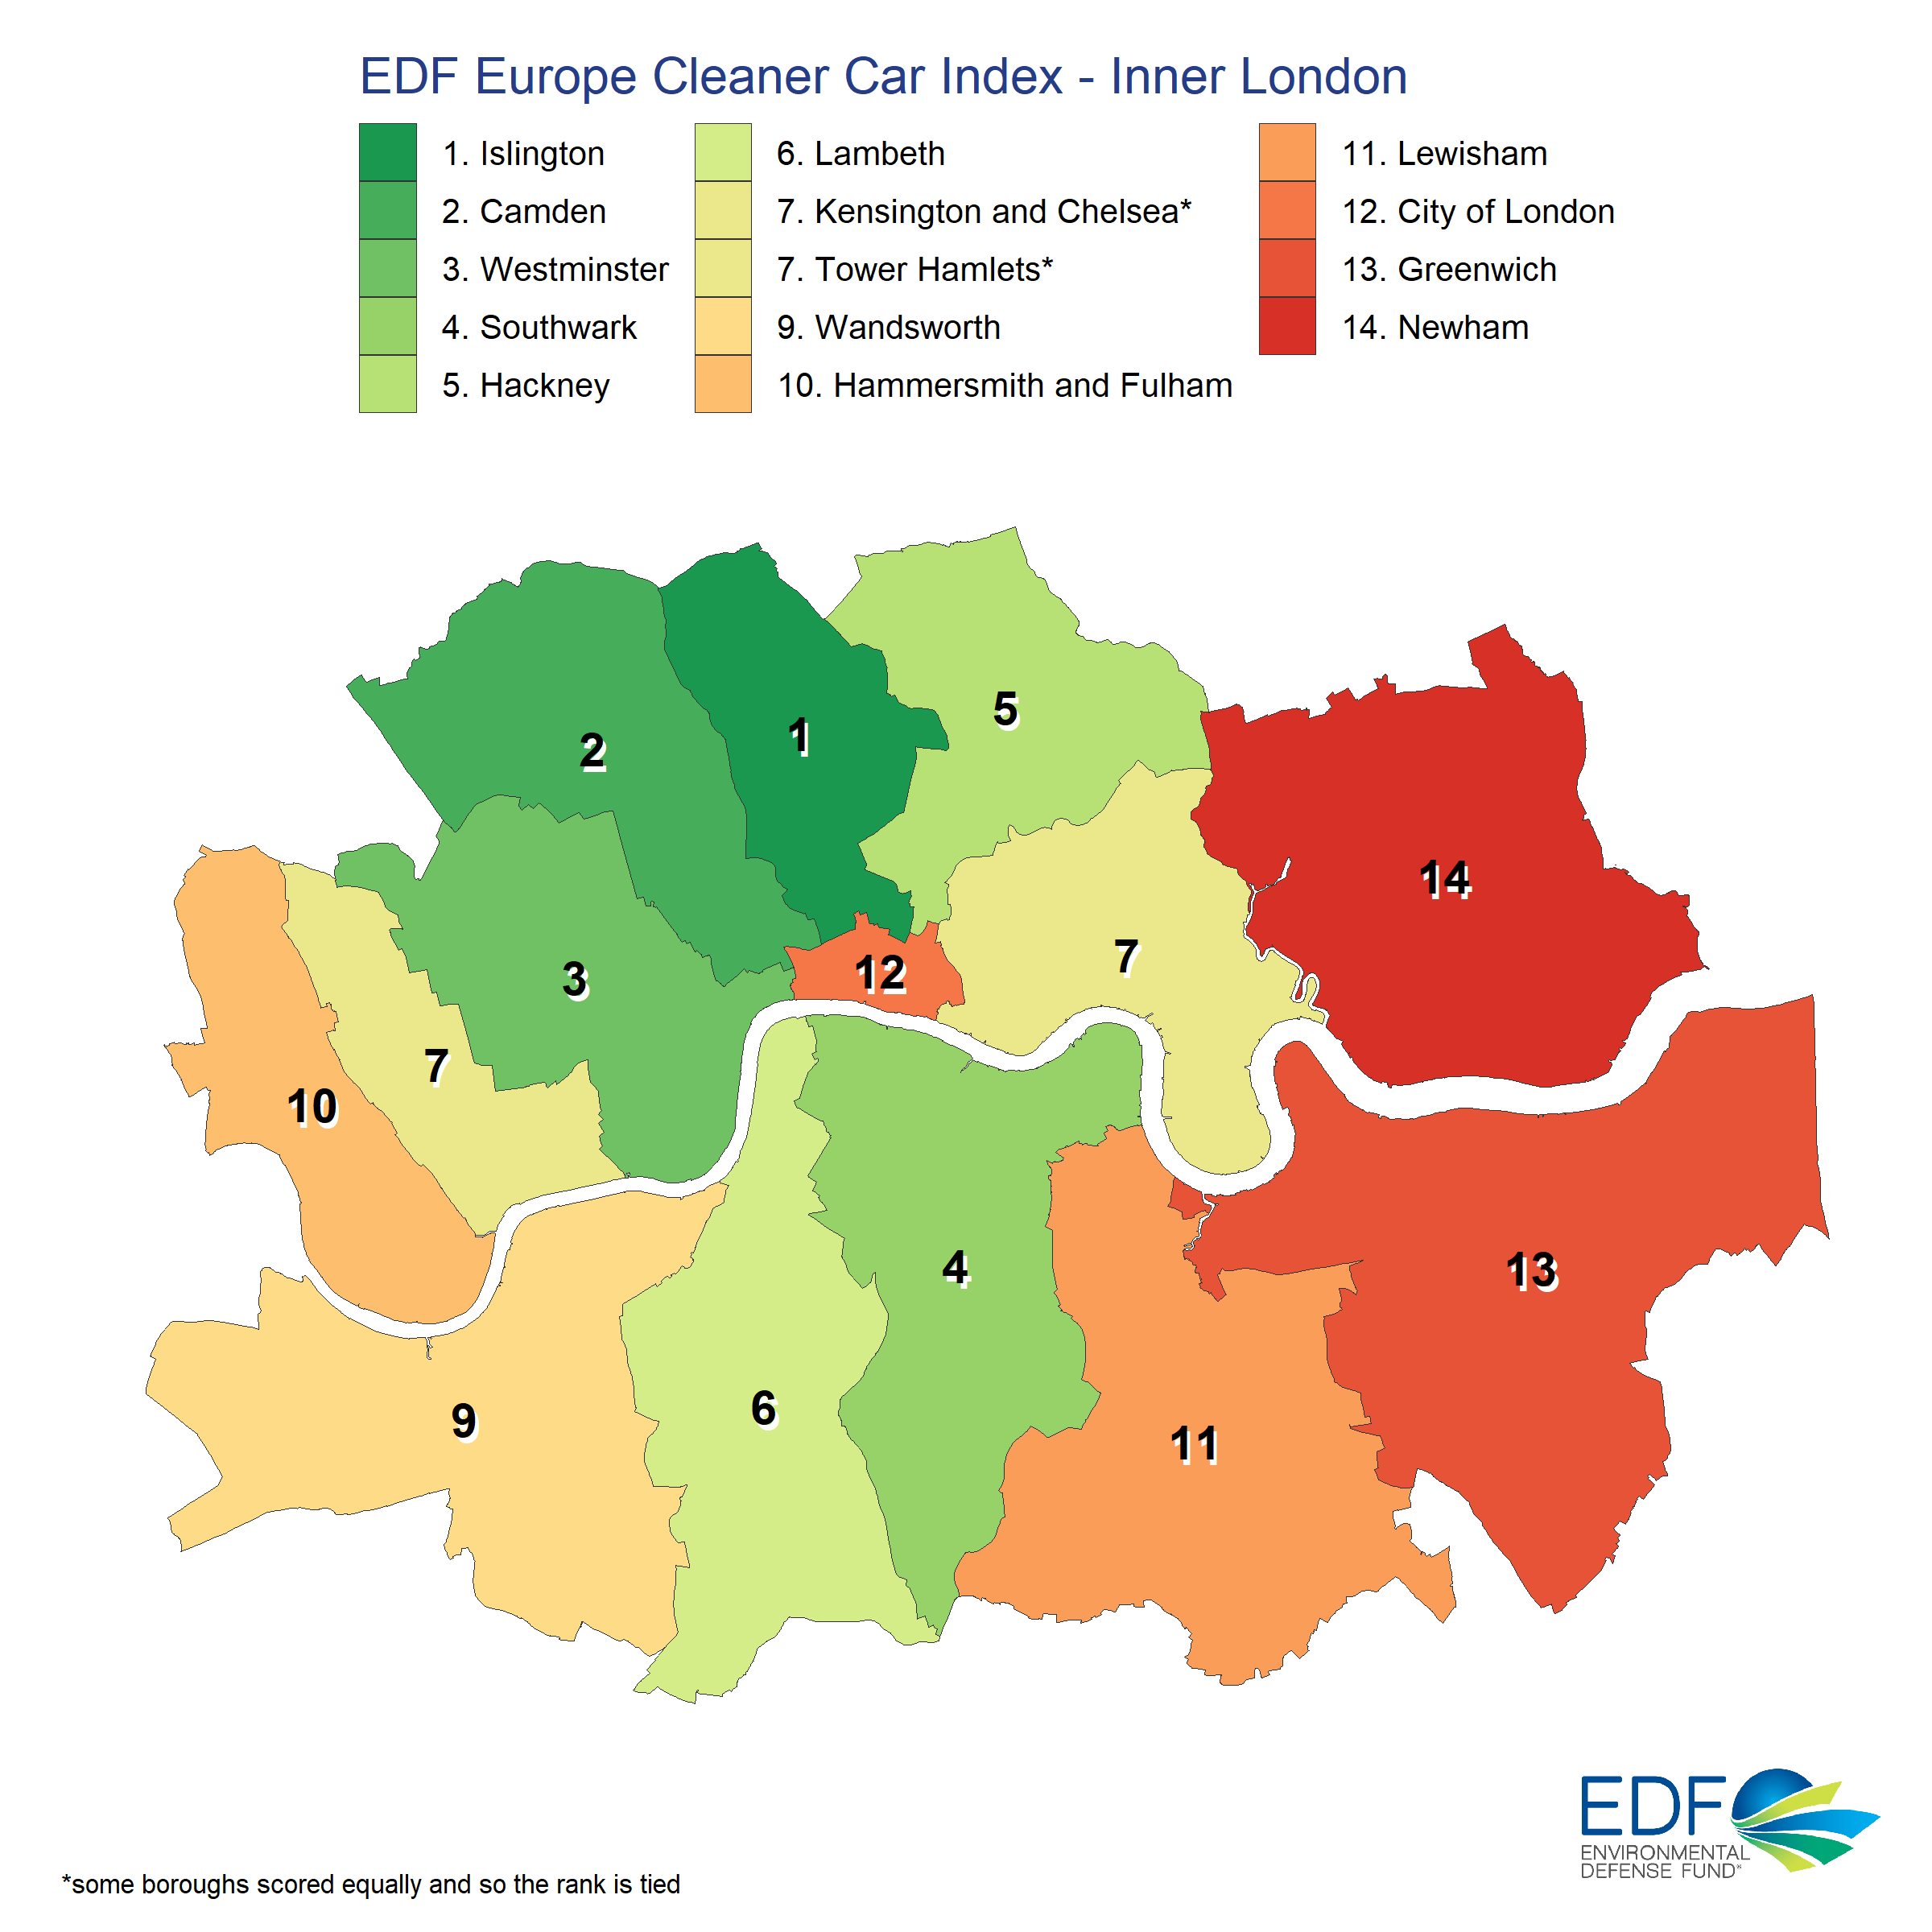 Cleaner car index inner London appendix map 1